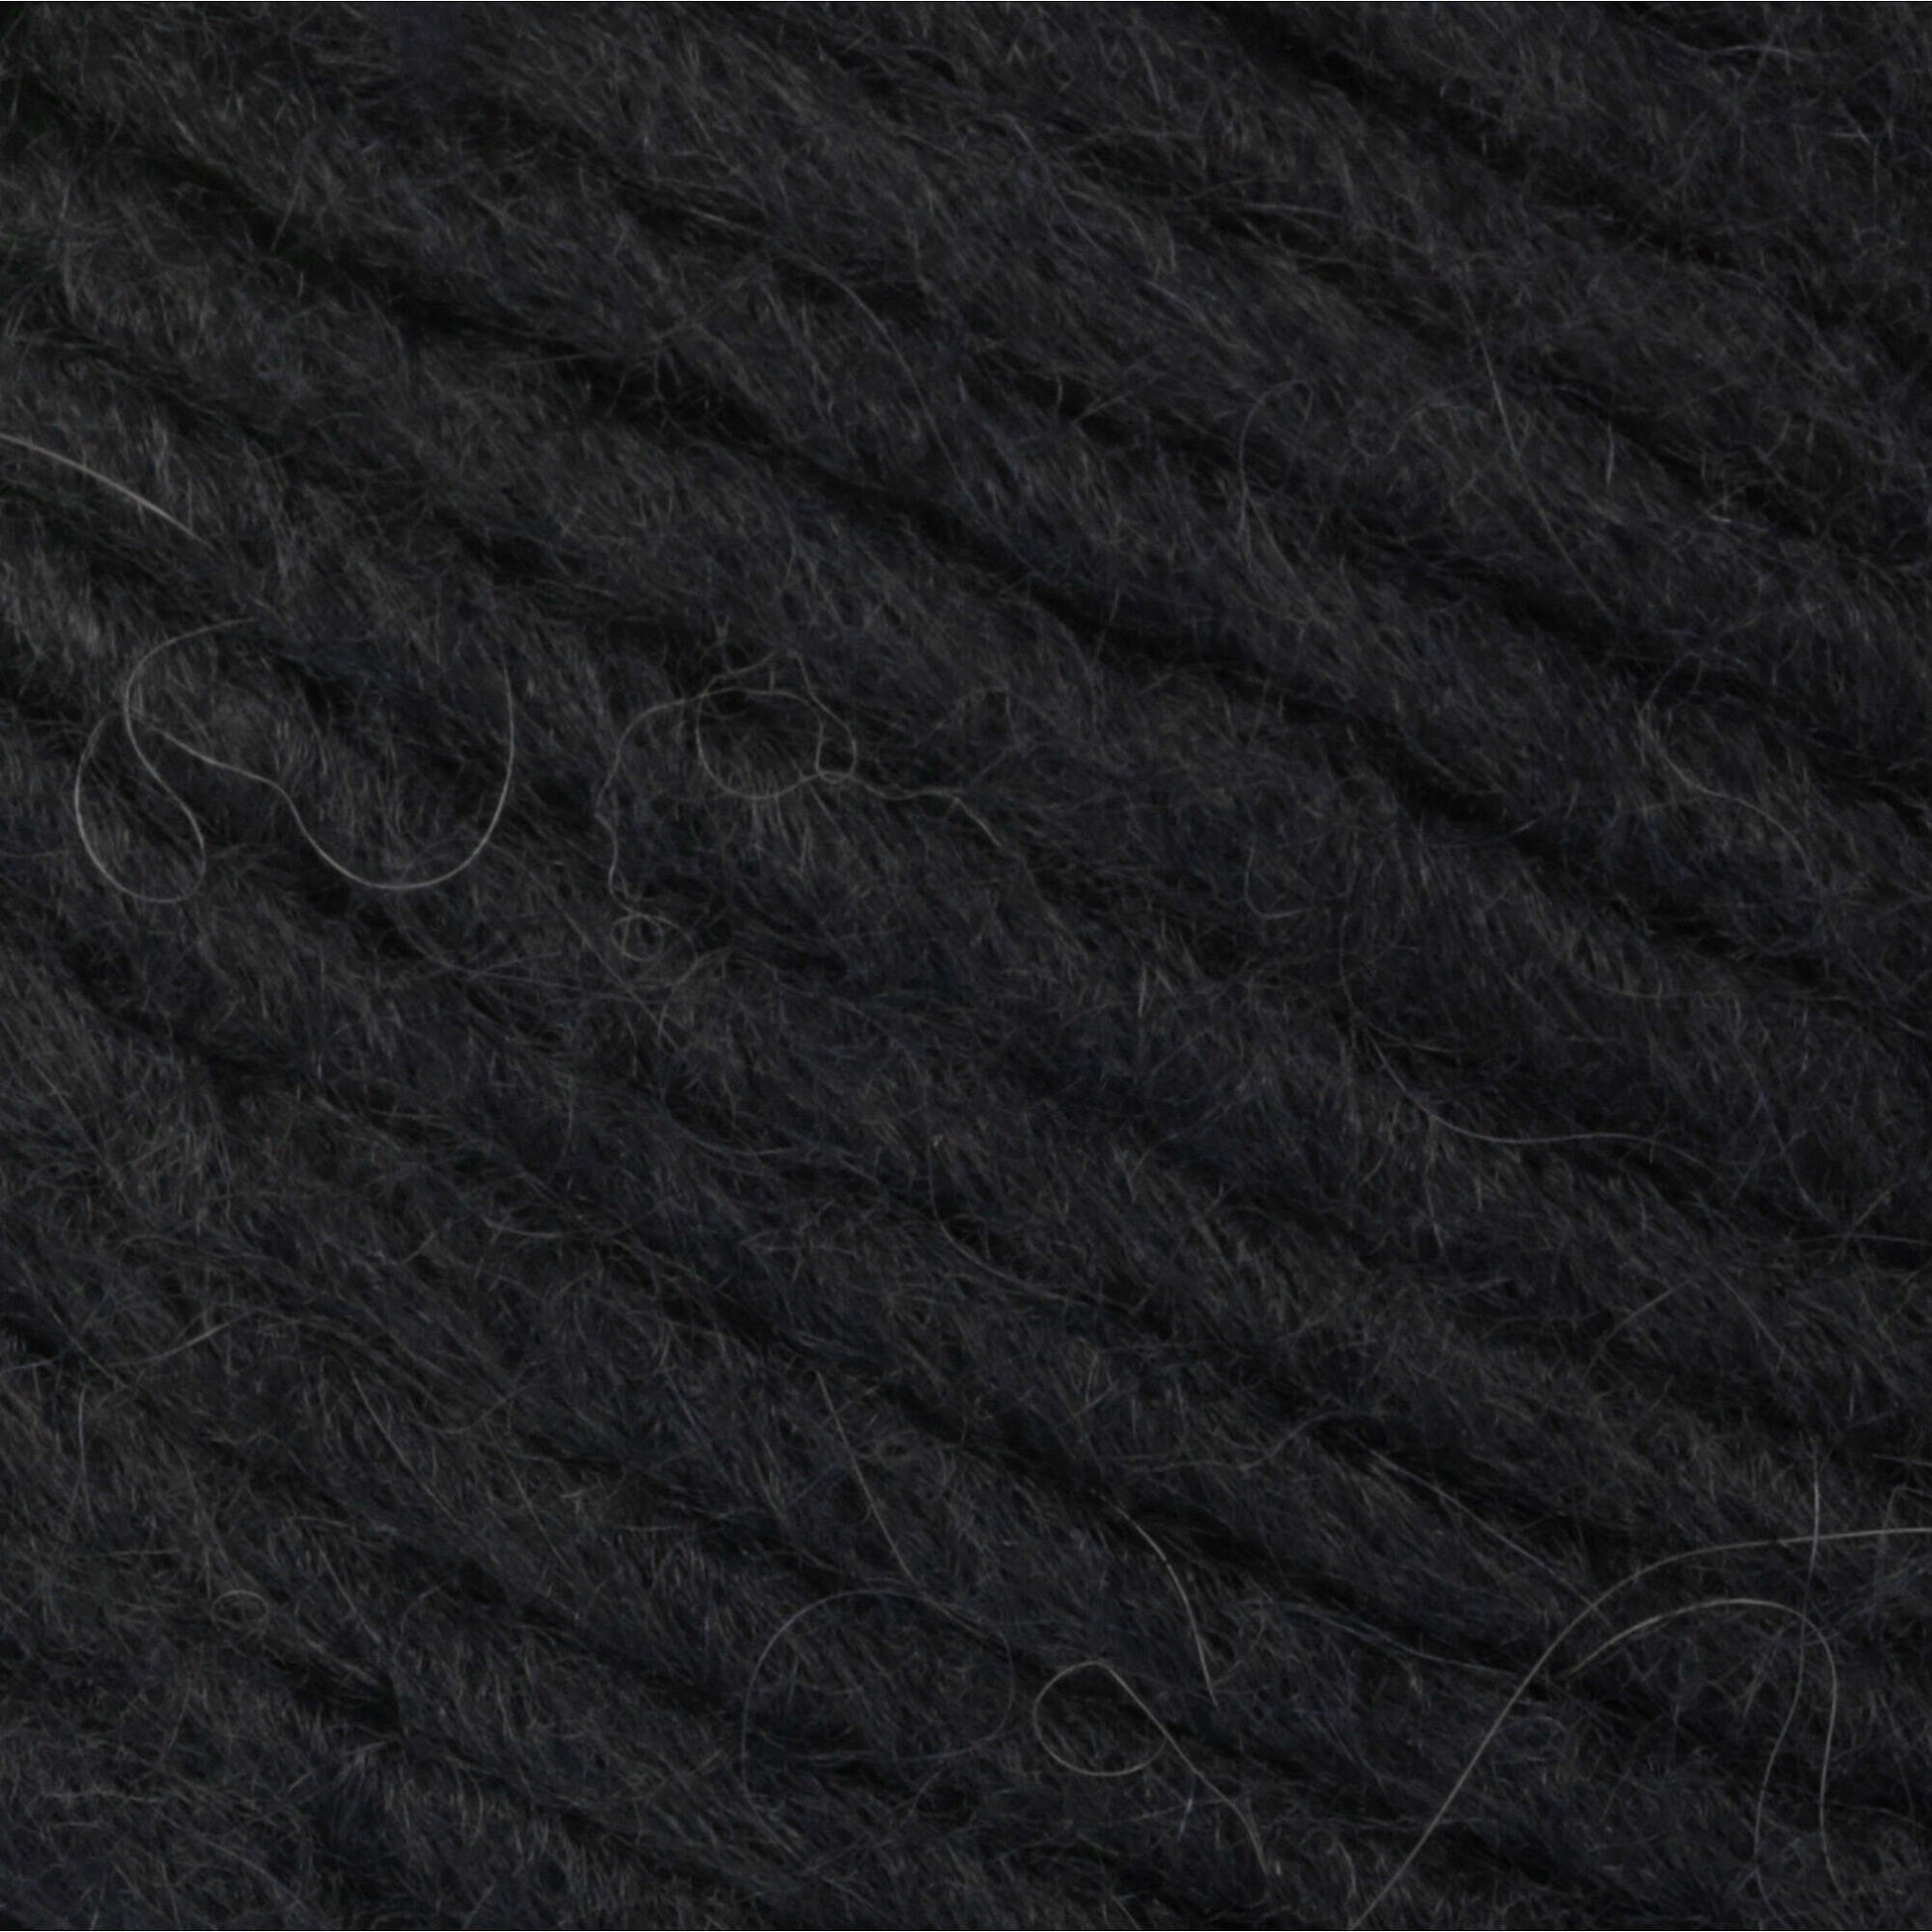 Patons Alpaca Blend Yarn - Discontinued Shades Onyx